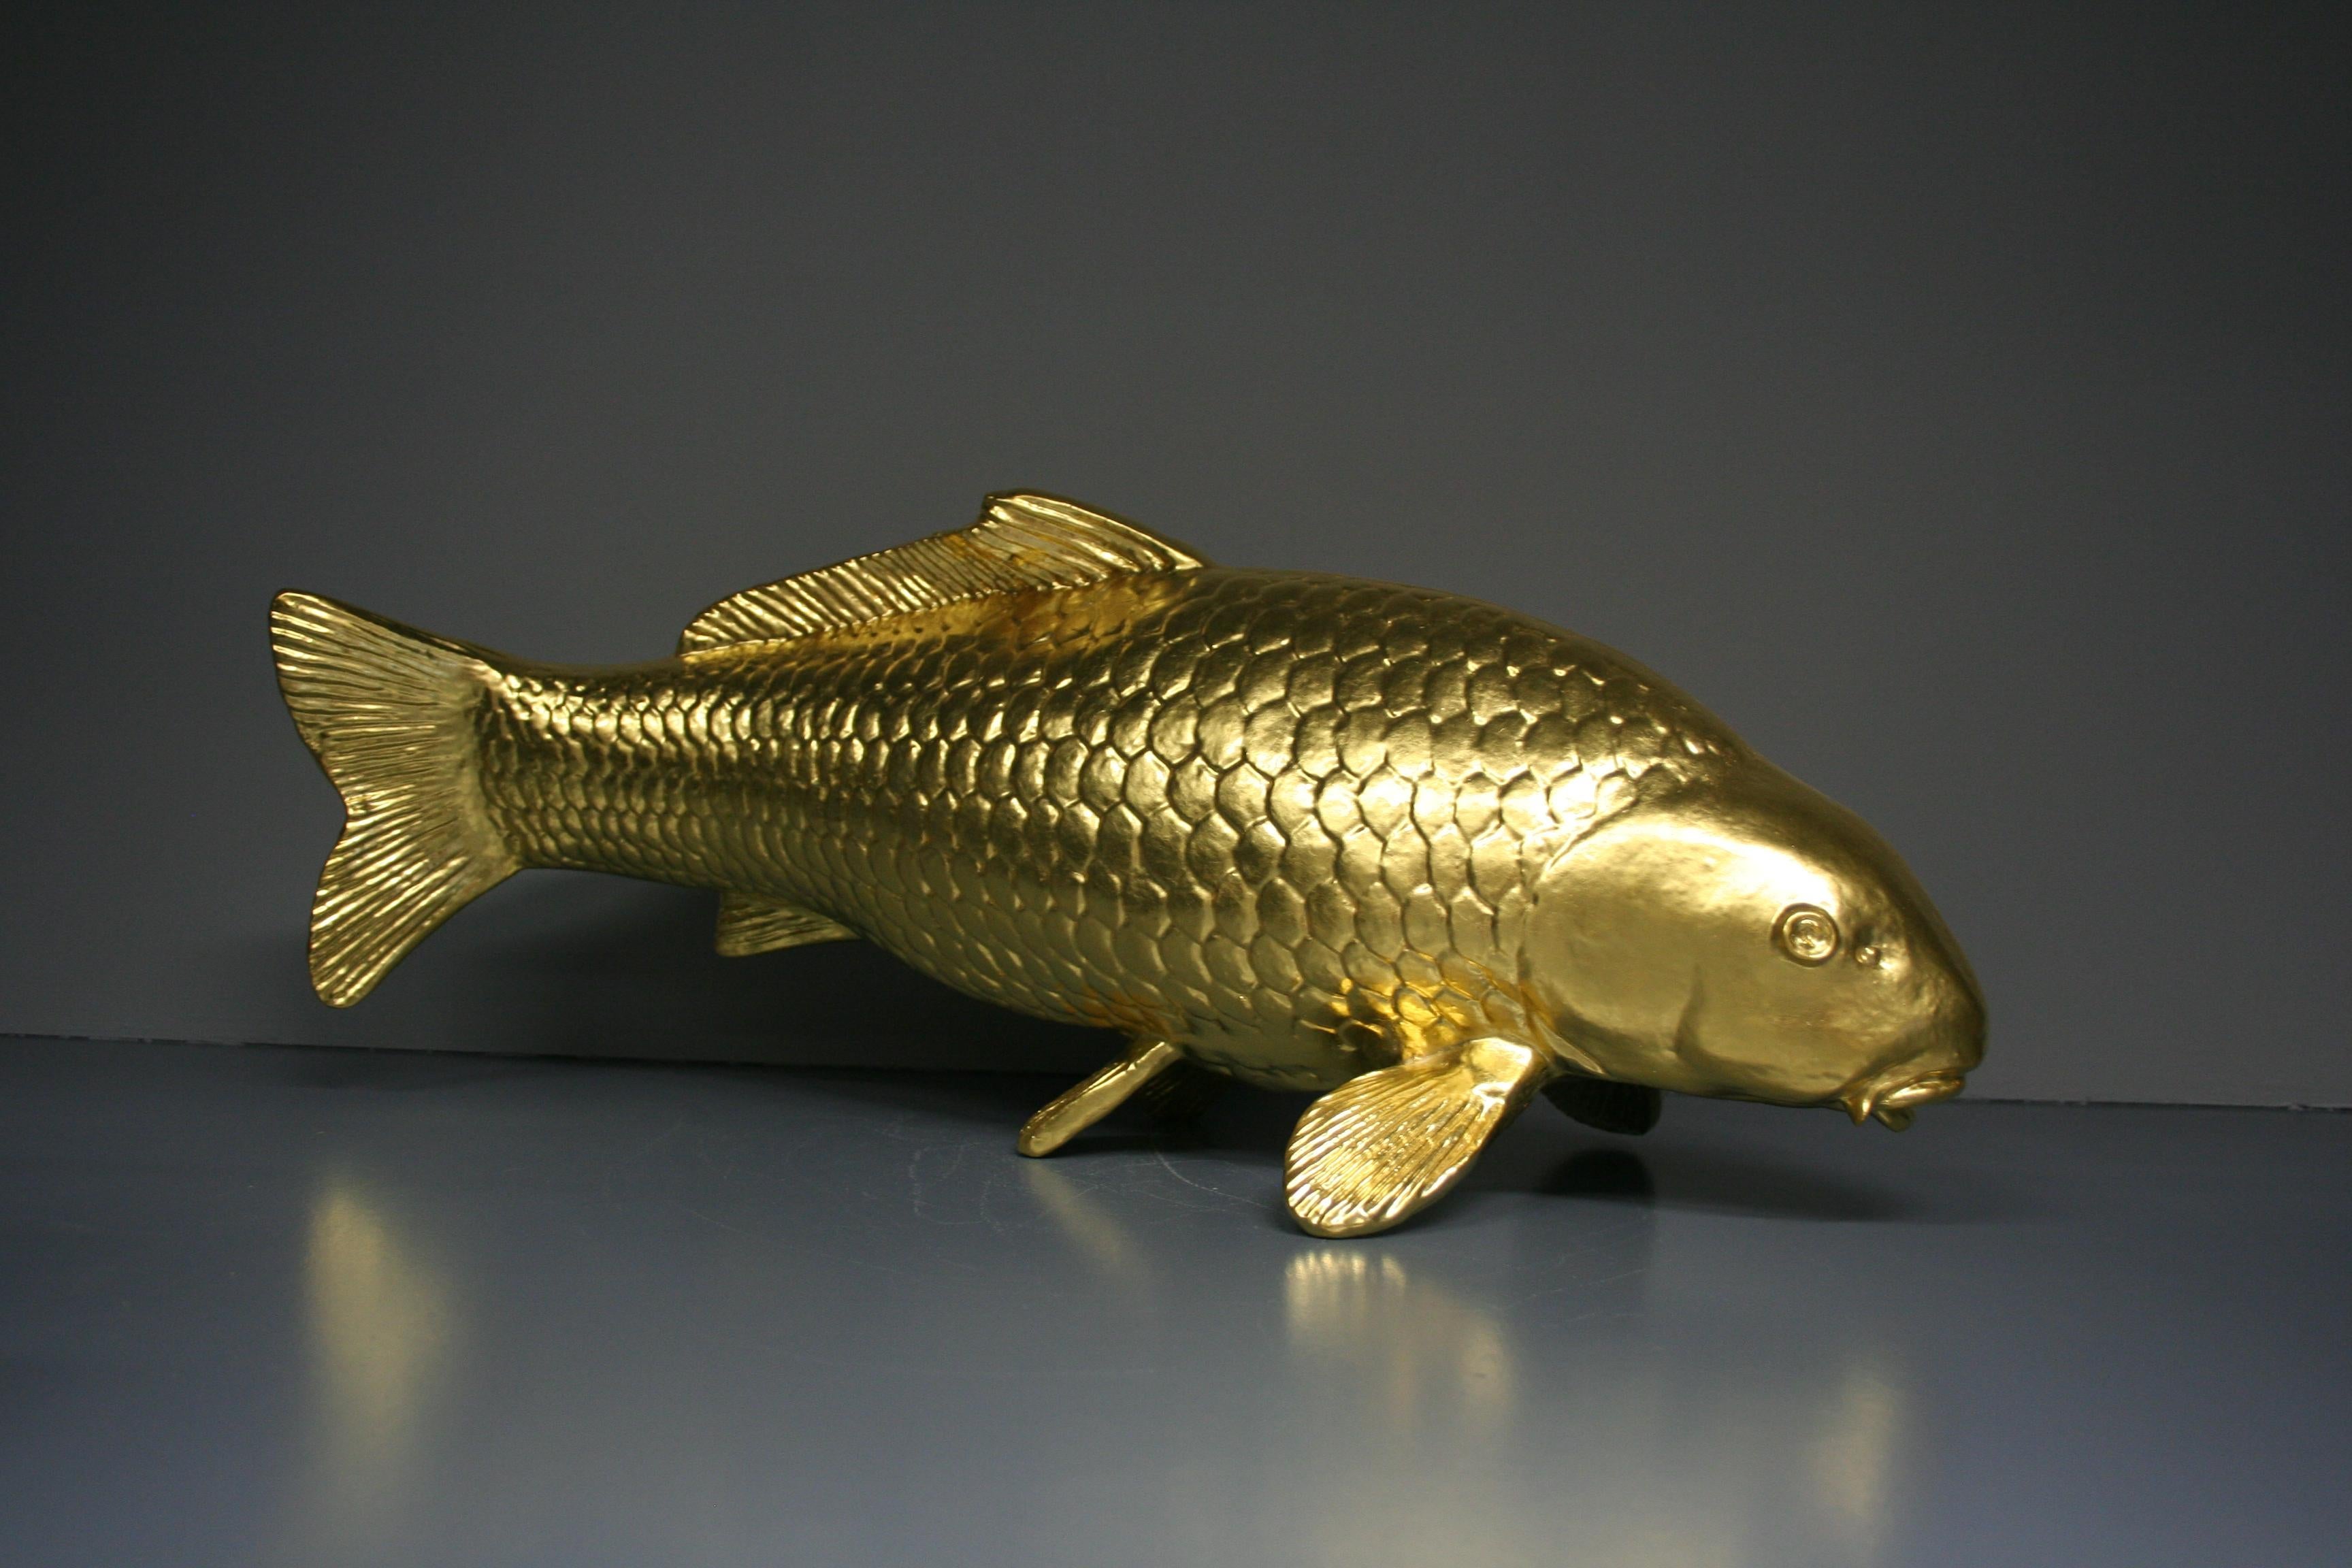 Steven Figurative Sculpture – Goldener Schilfrohr 24 Karat vergoldet